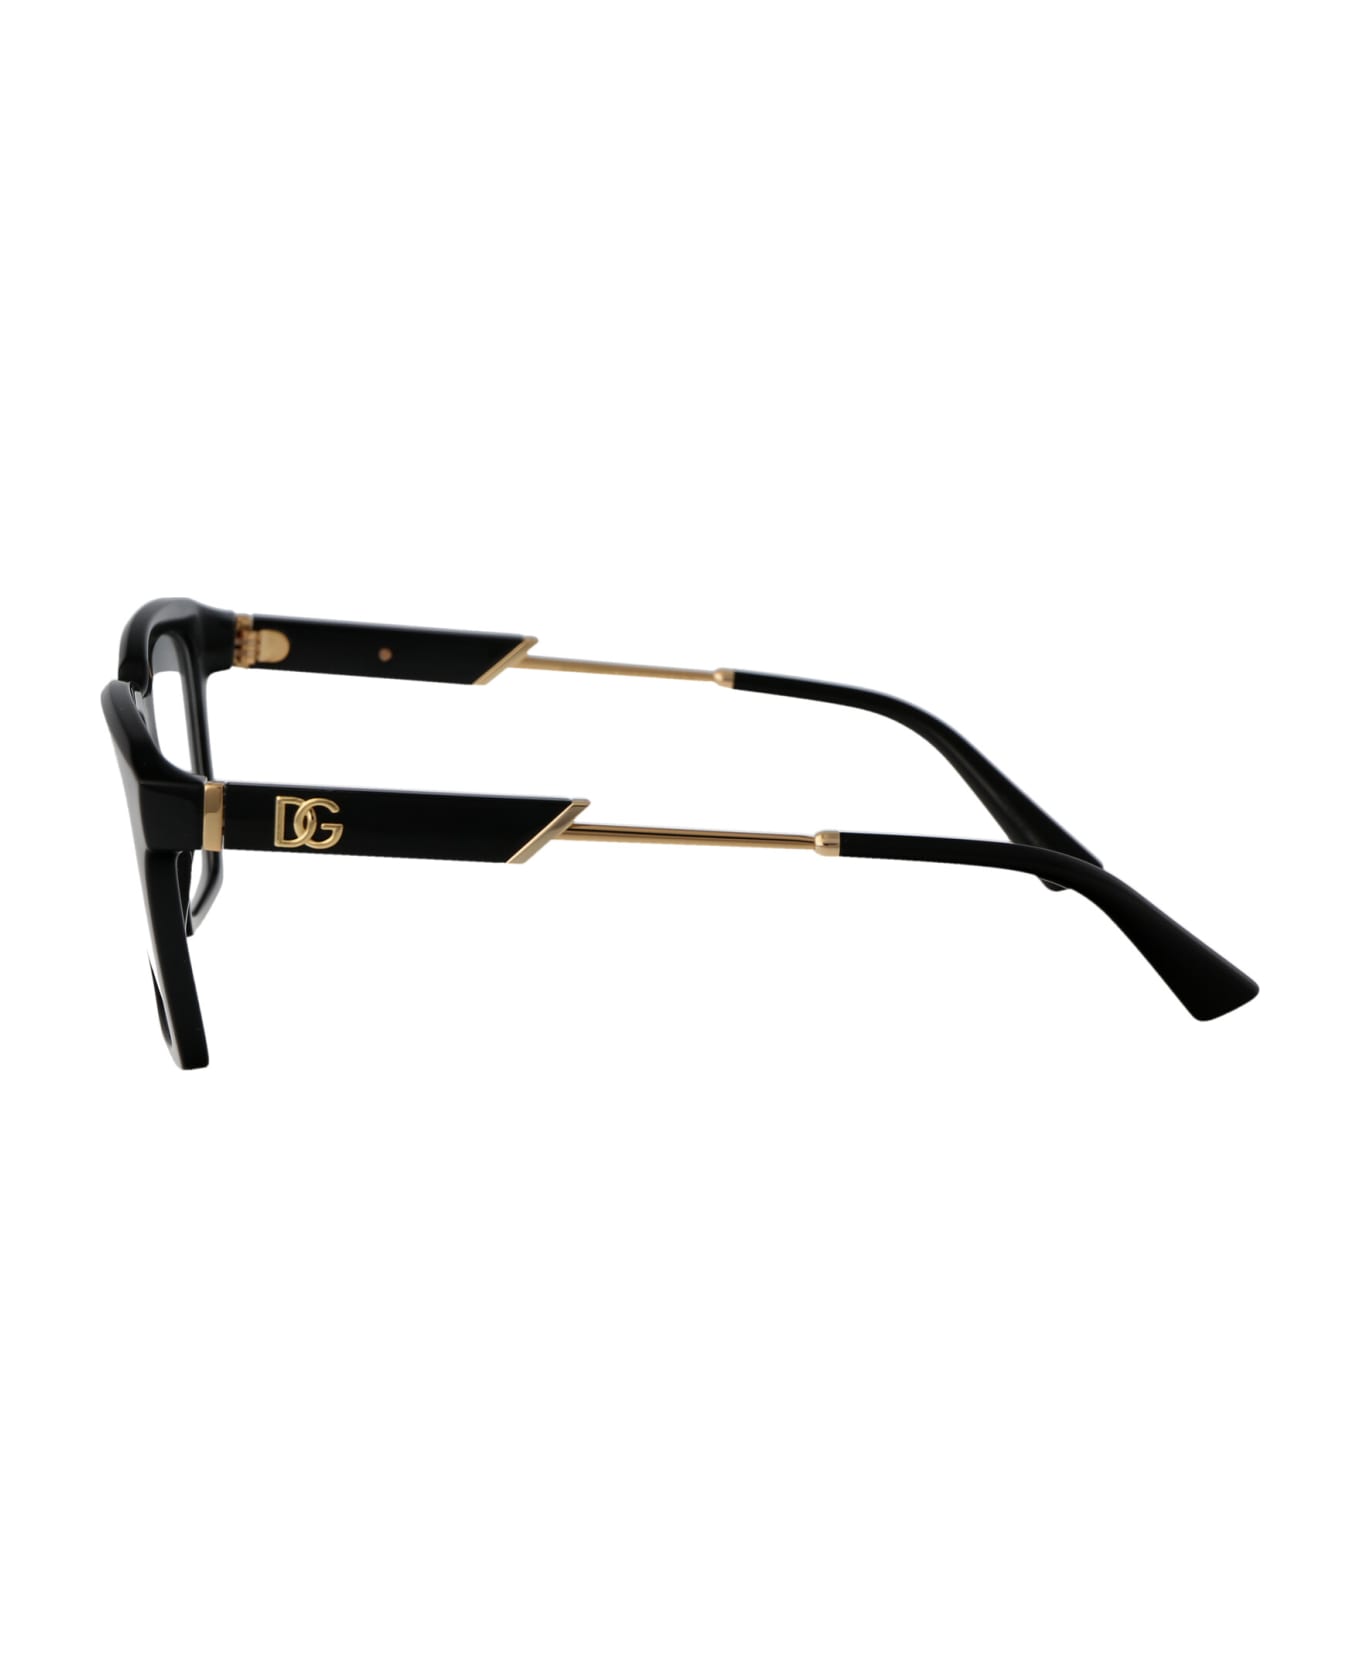 Dolce & Gabbana Eyewear 0dg5104 Glasses - 501 BLACK アイウェア